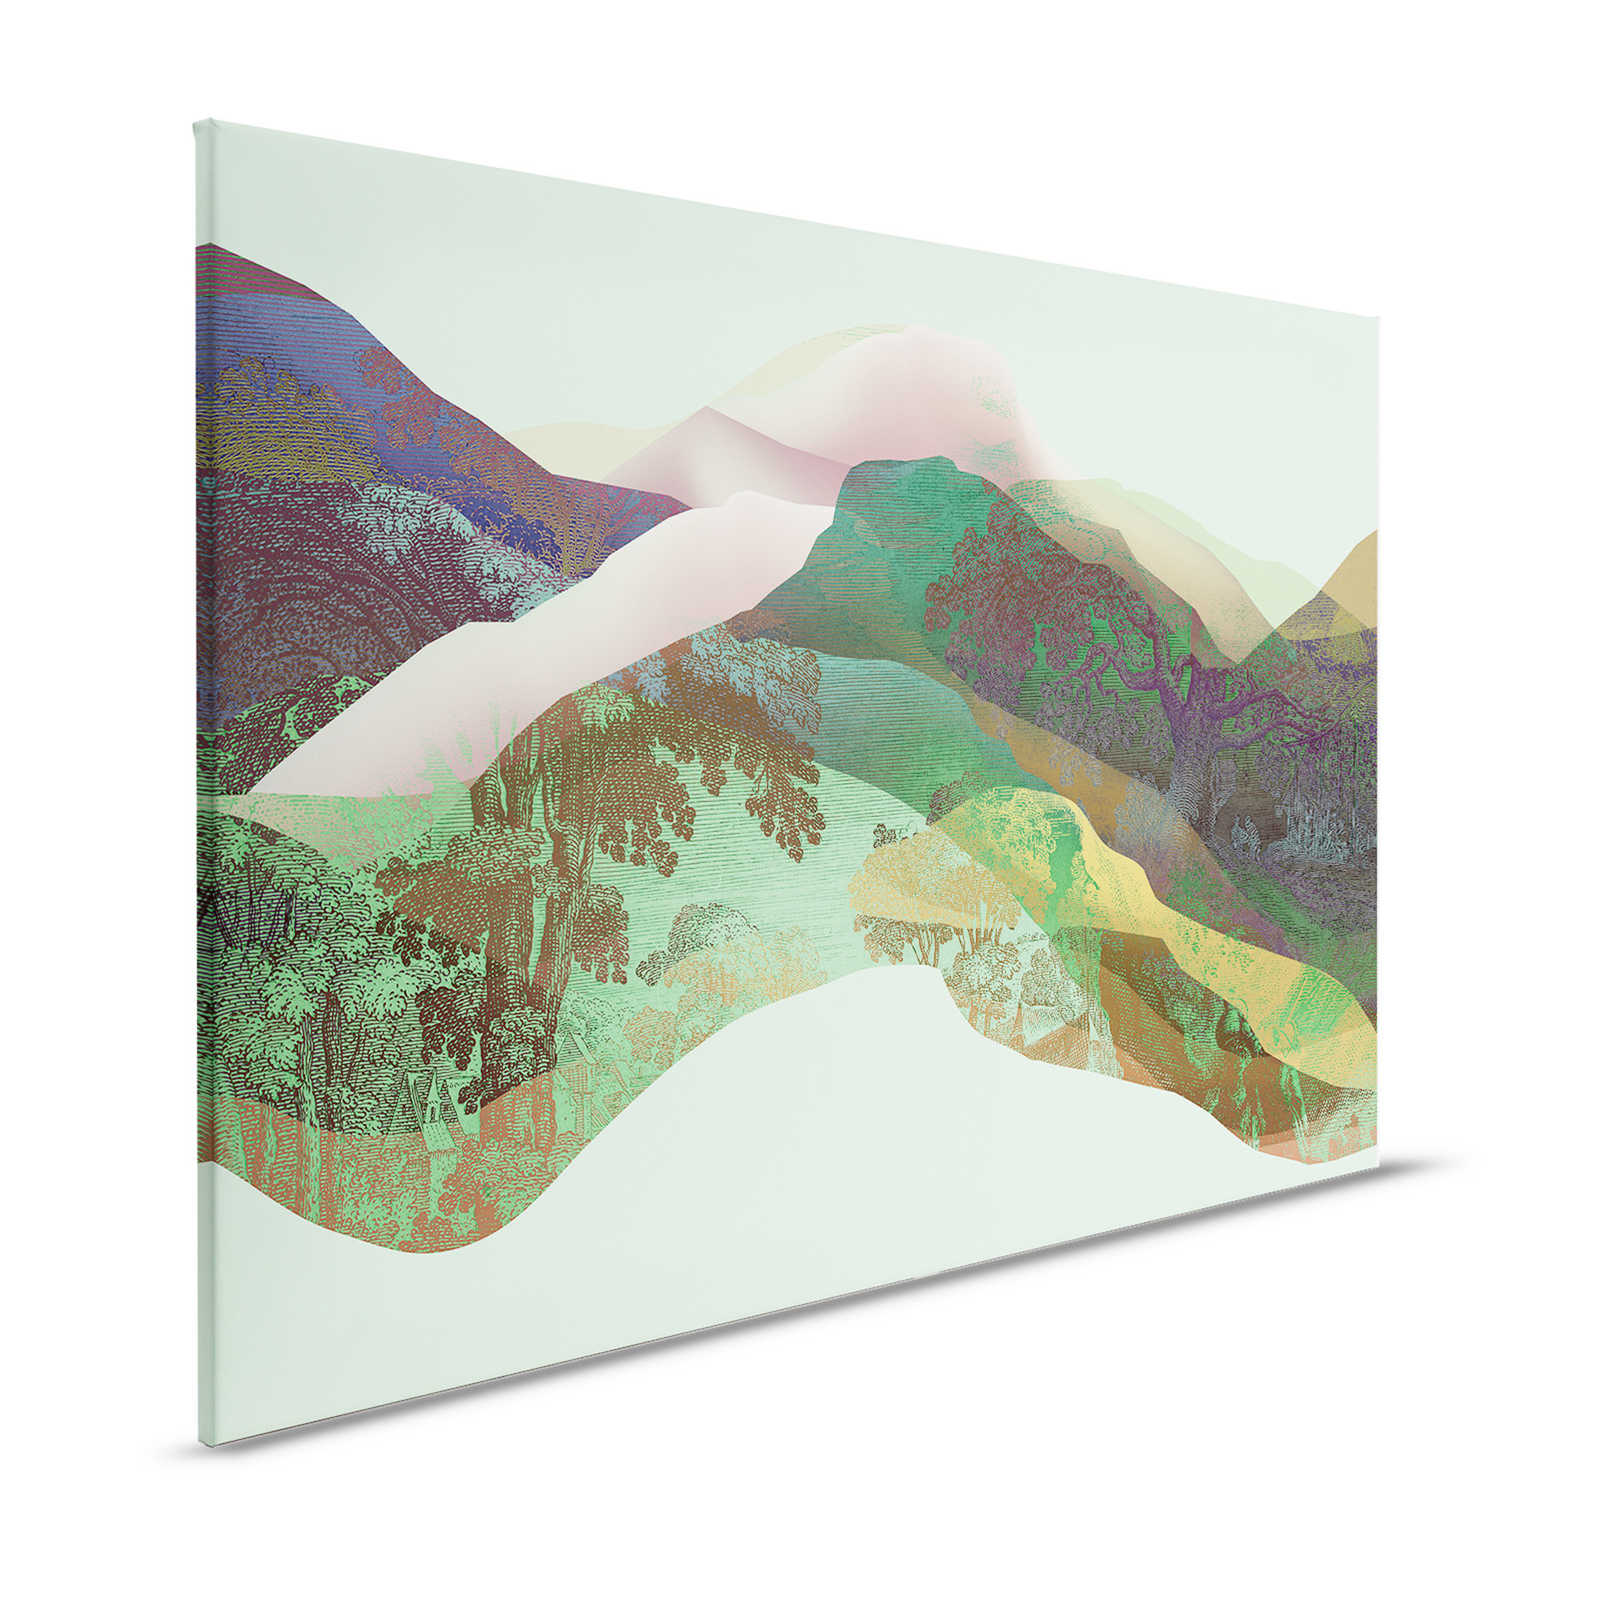 Magic Mountain 3 - Canvas painting green mountains modern design - 1,20 m x 0,80 m
